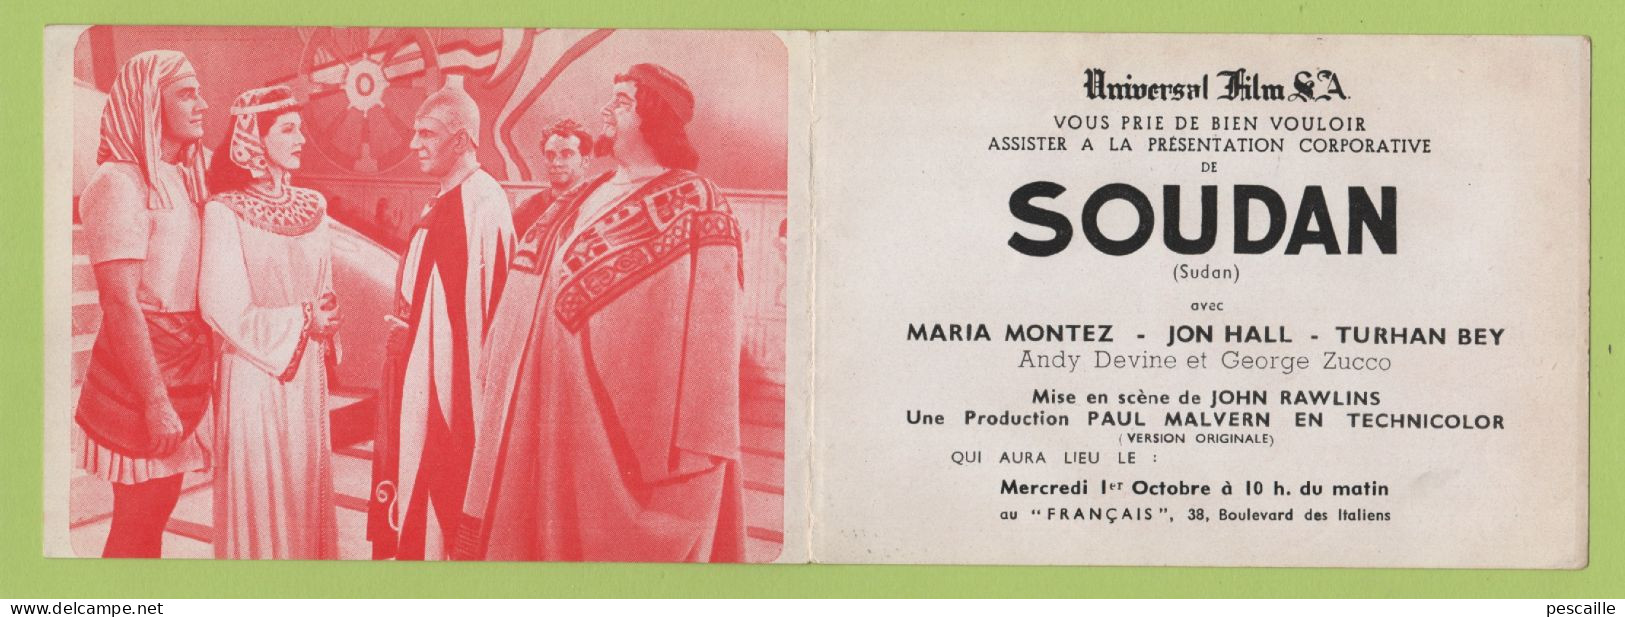 1945 ? - INVITATION UNIVERSAL FILM S.A. A LA PROJECTION DU FILM SOUDAN SUDAN AVEC MARIA MONTEZ JON HALL TURHAN BEY ... - Cinema Advertisement